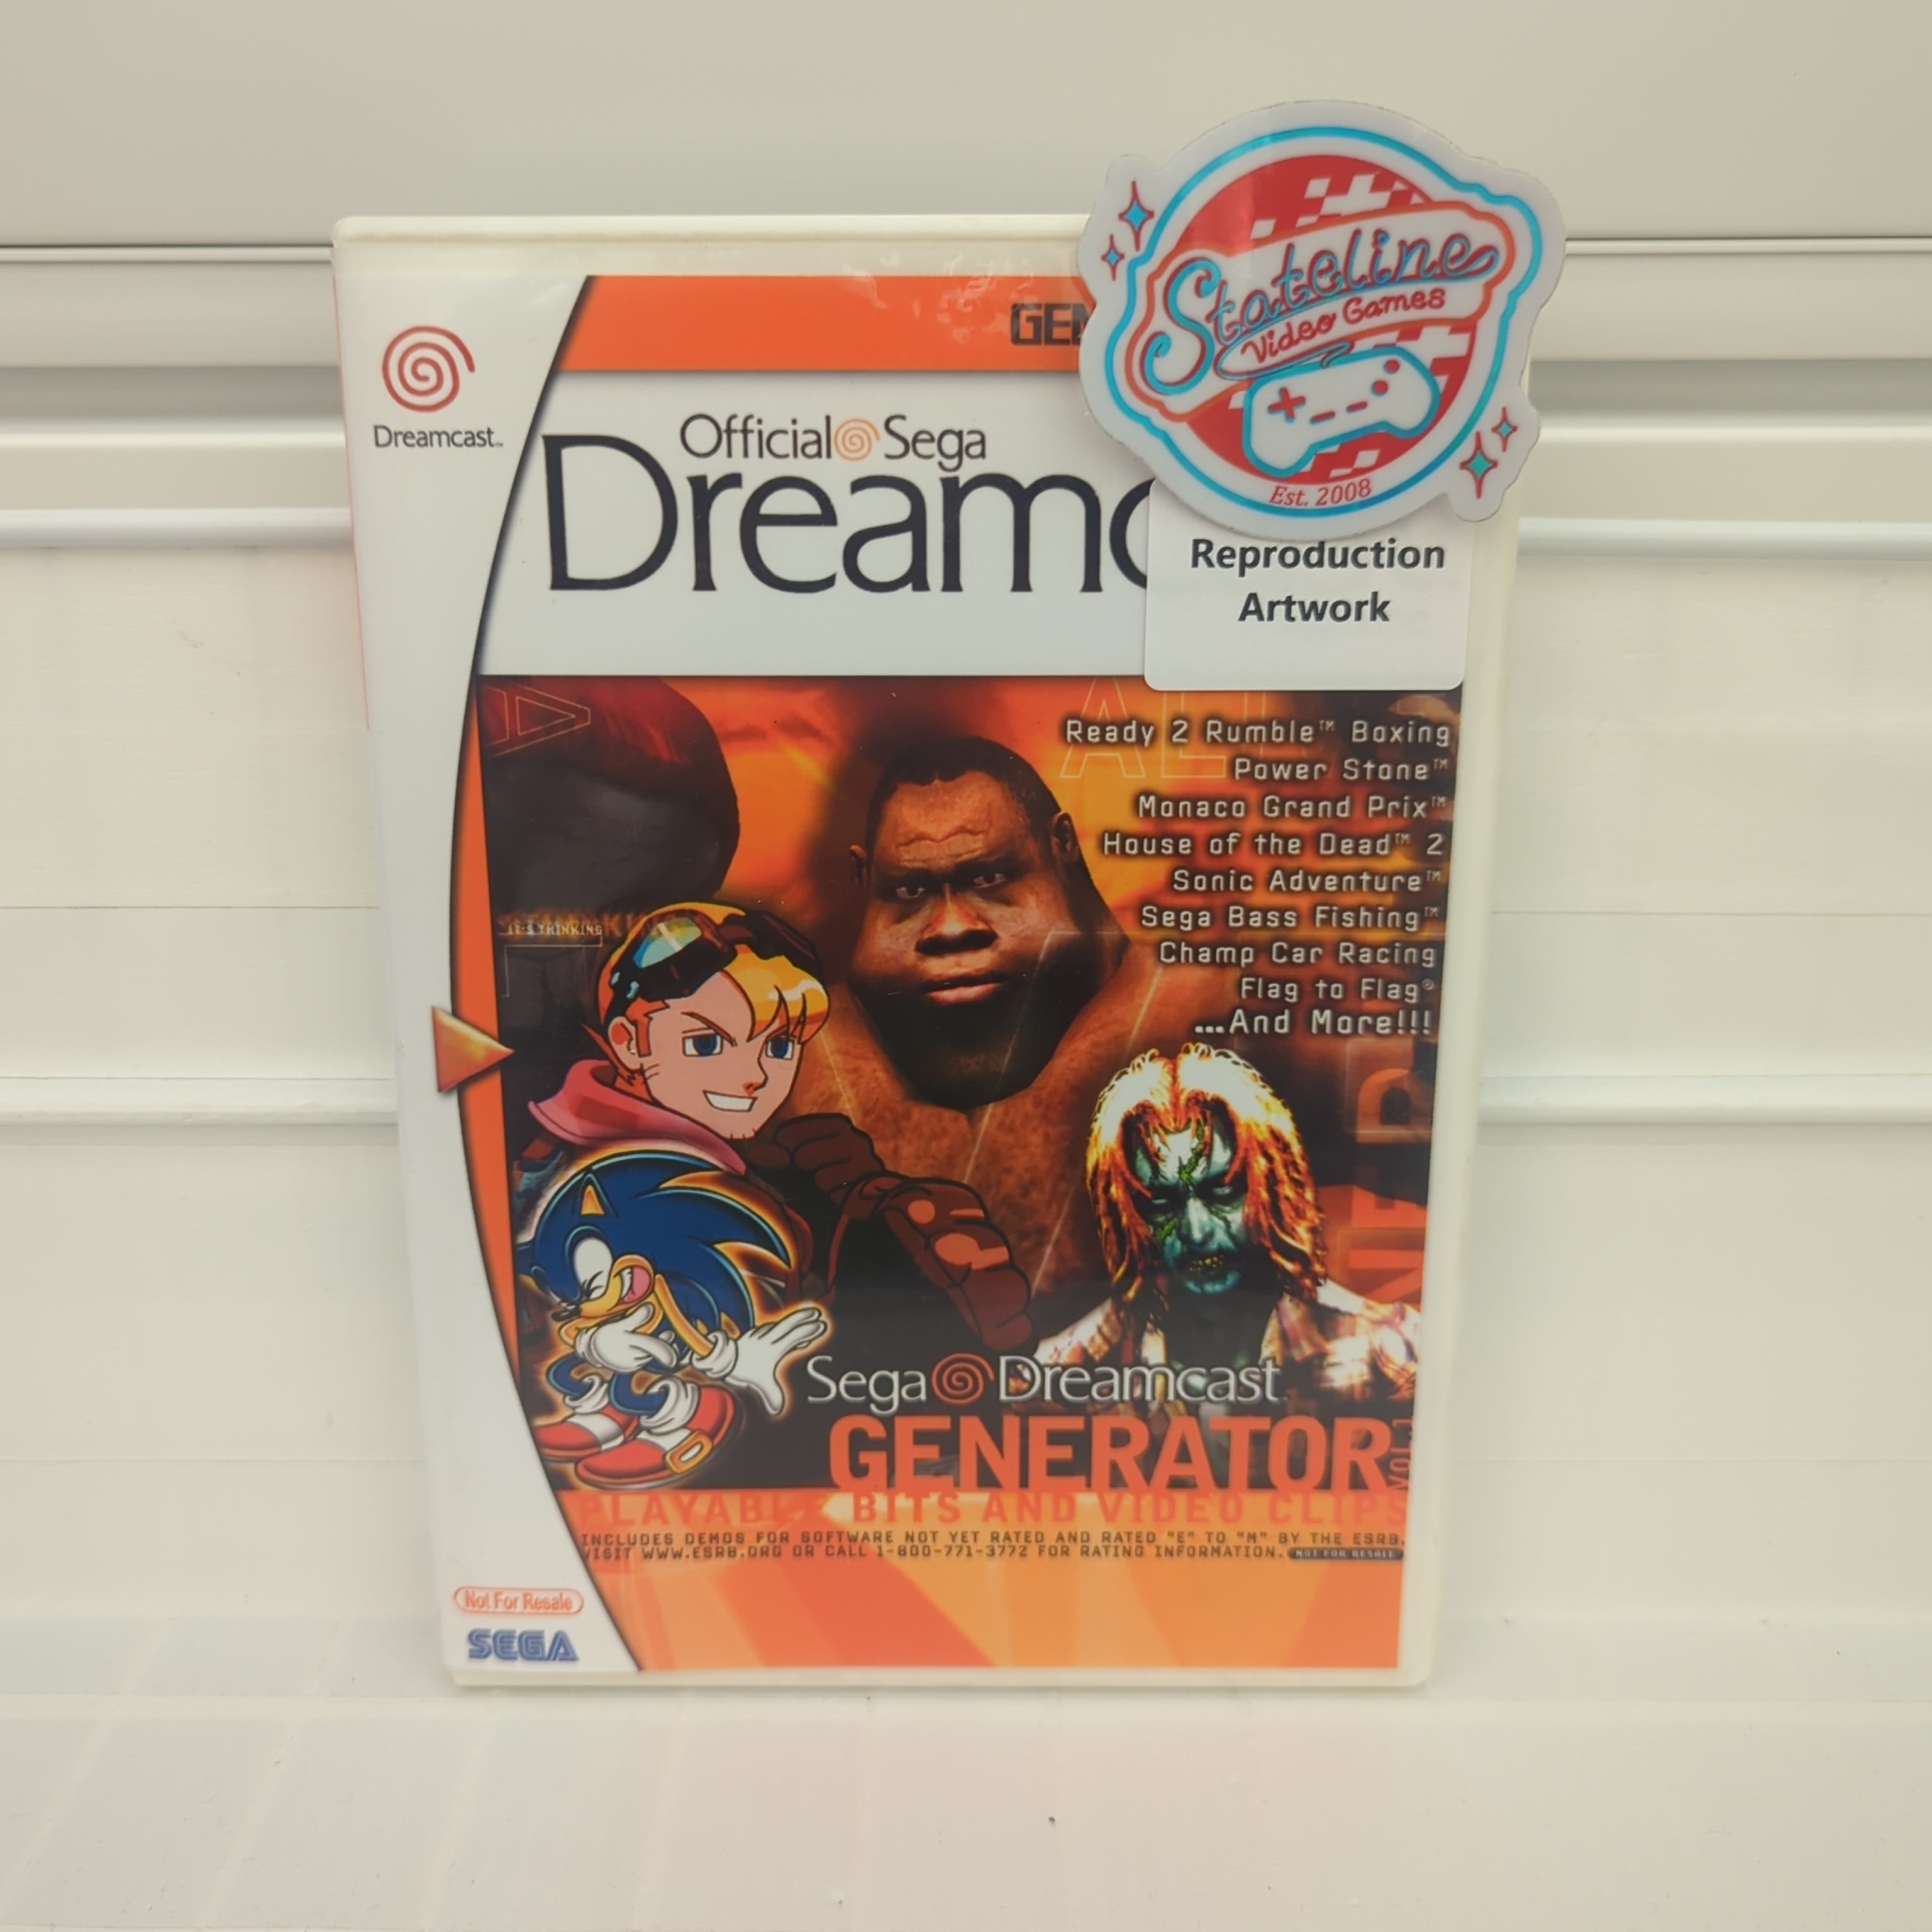 Sega Dreamcast – Stateline Video Games Inc.